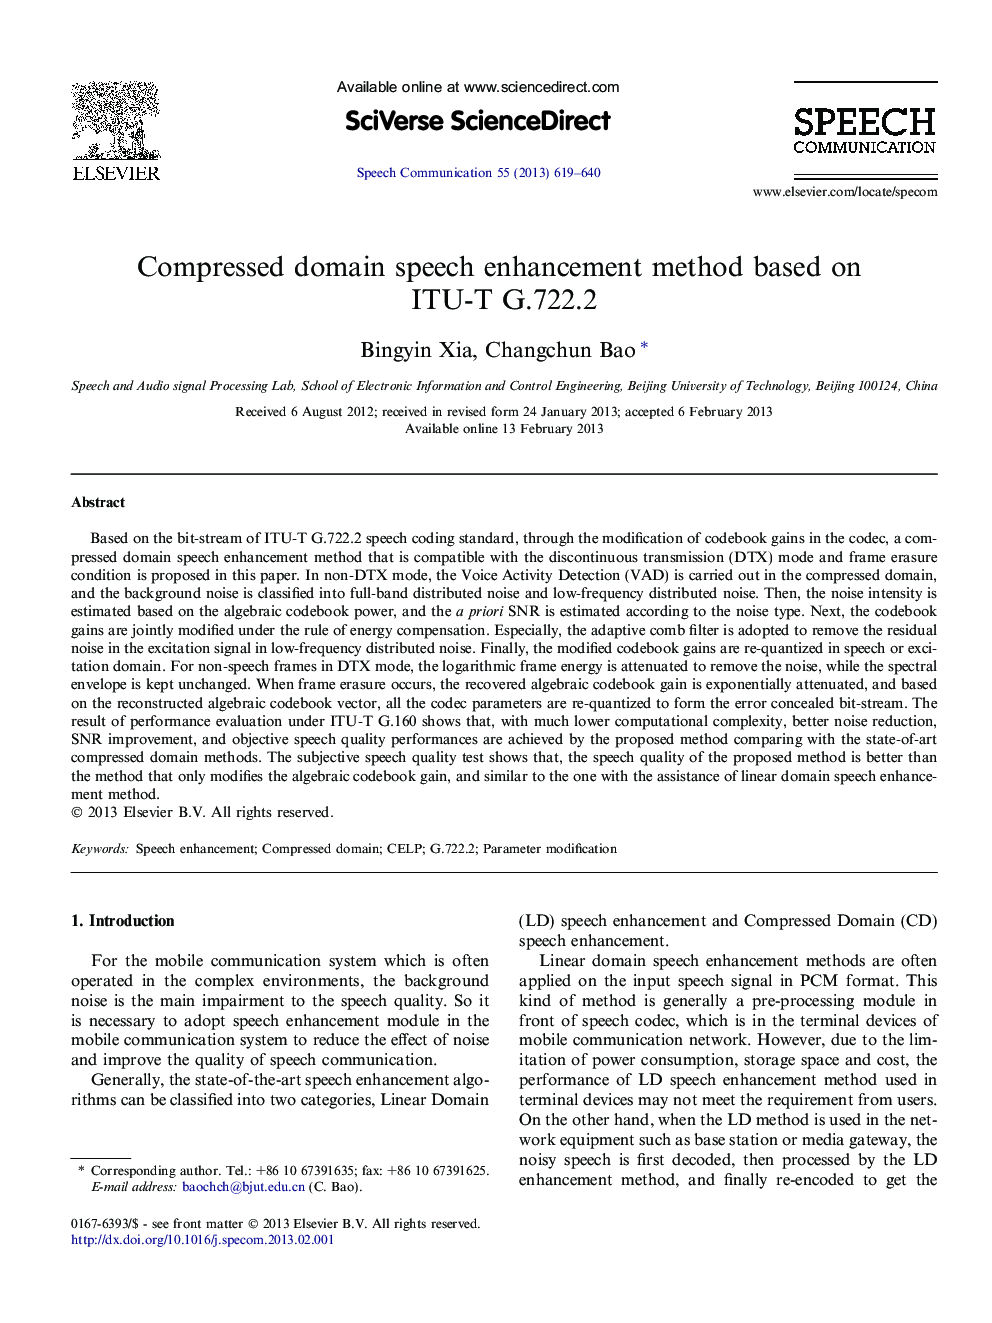 Compressed domain speech enhancement method based on ITU-T G.722.2